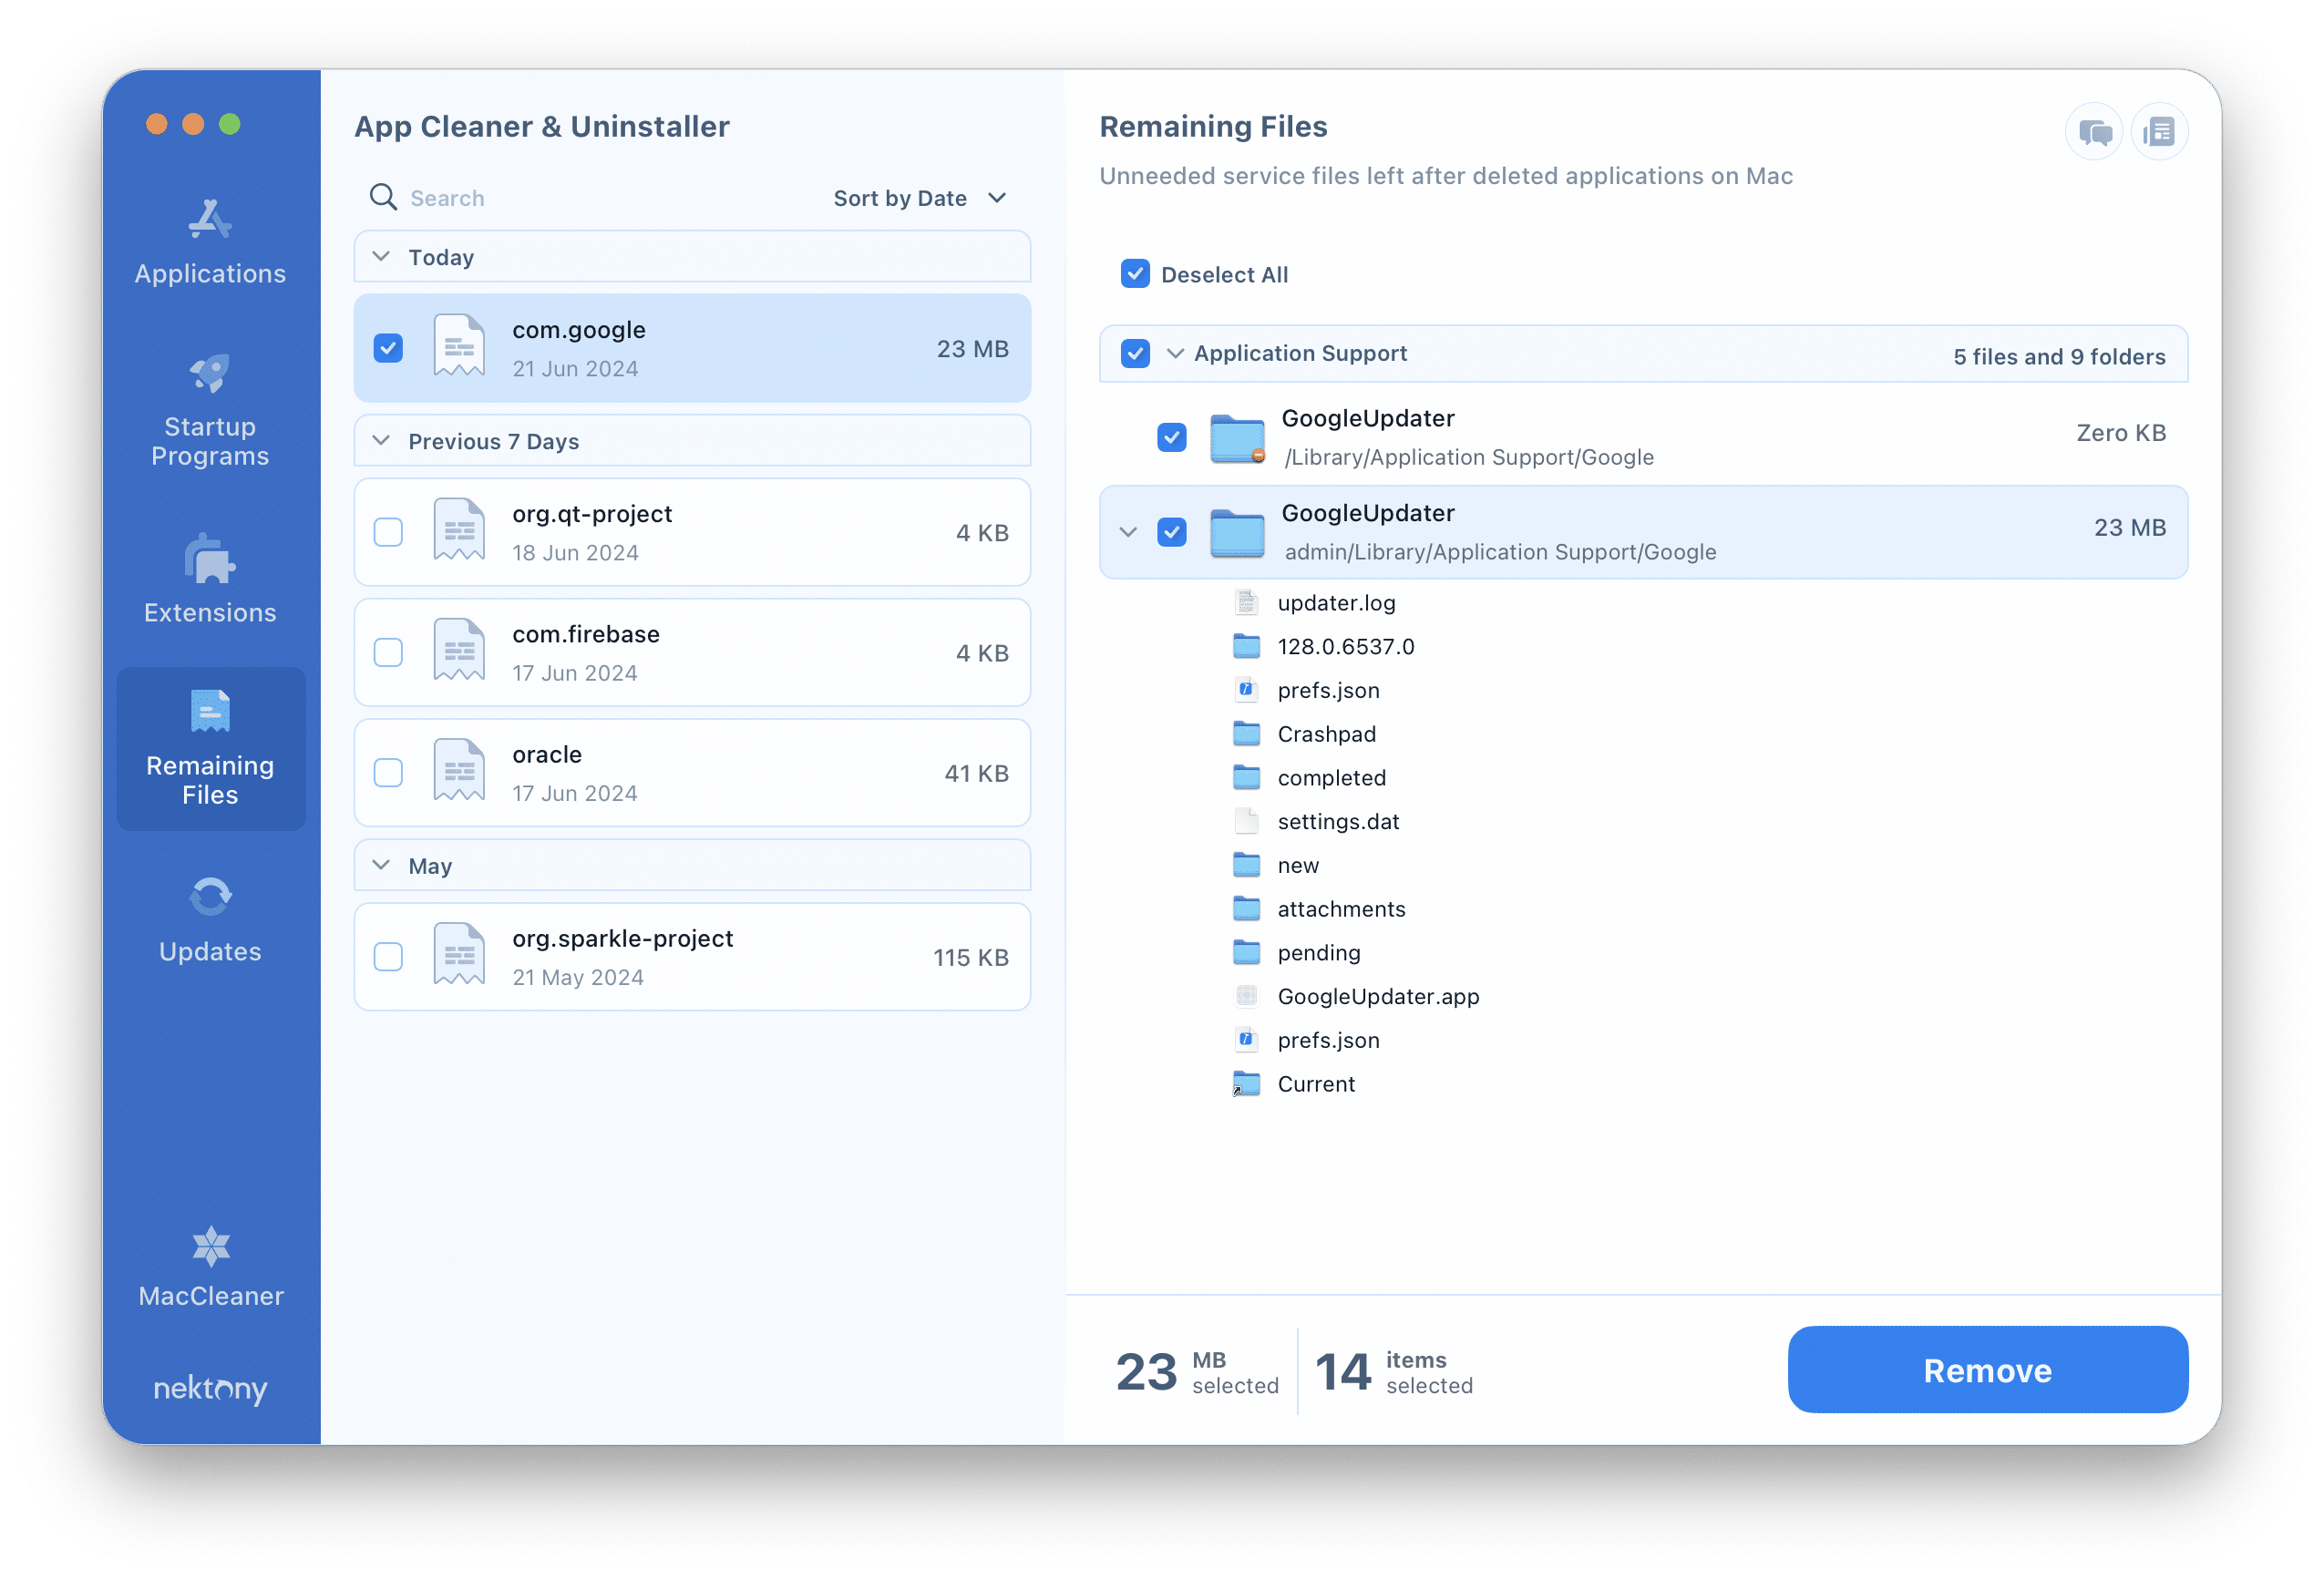 App Cleaner Uninstaller showing remaining files